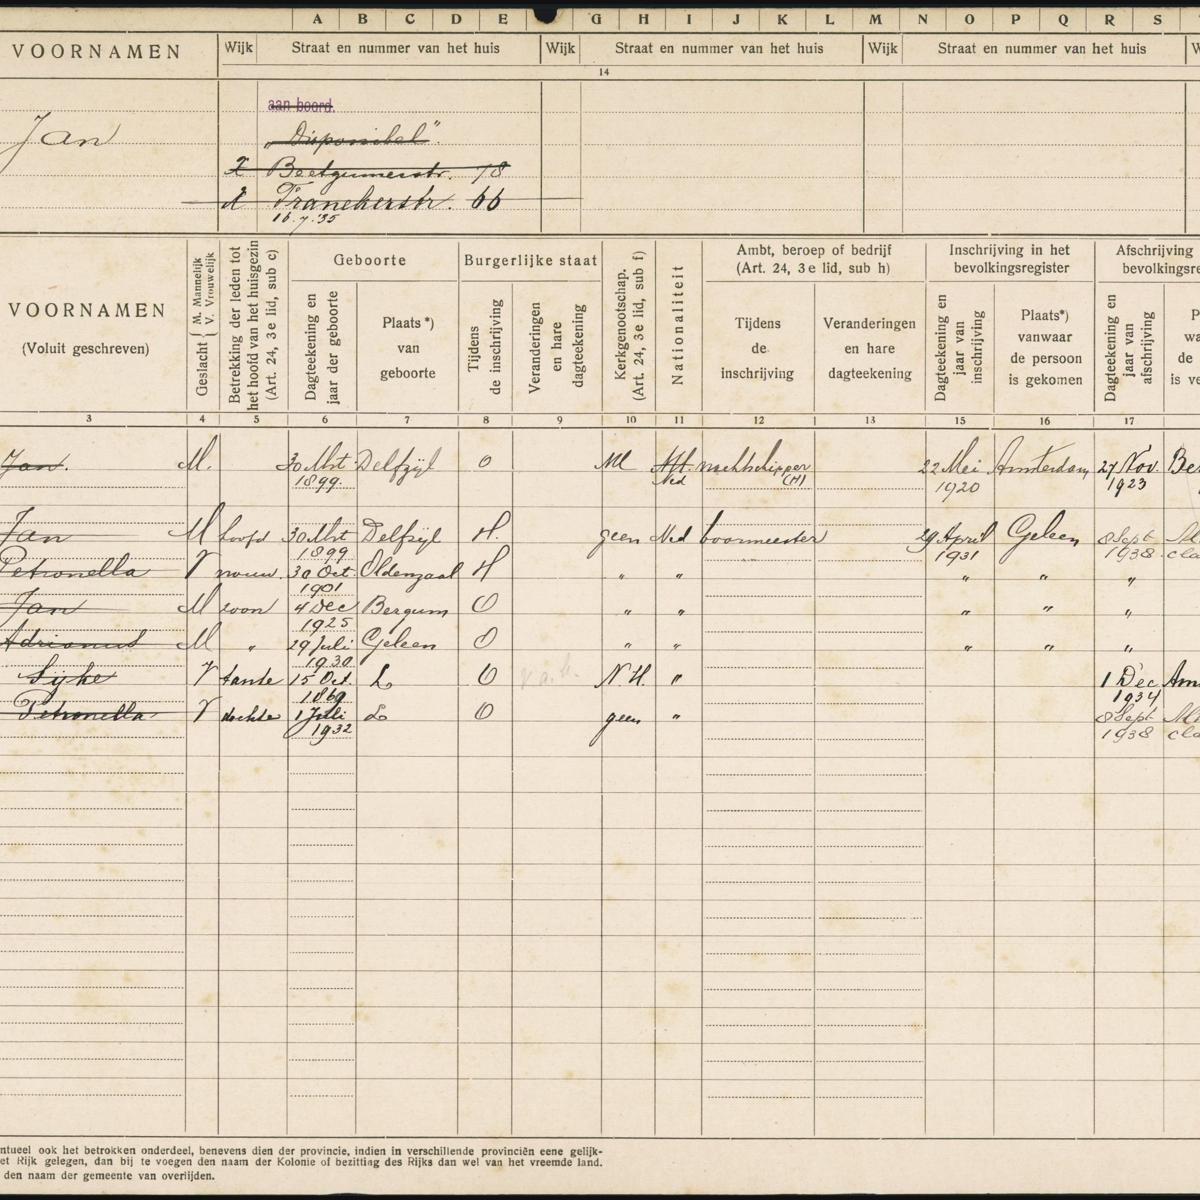 Population registry, Leeuwarden, archive 1002, inventory 4973, Feenstra, Jan